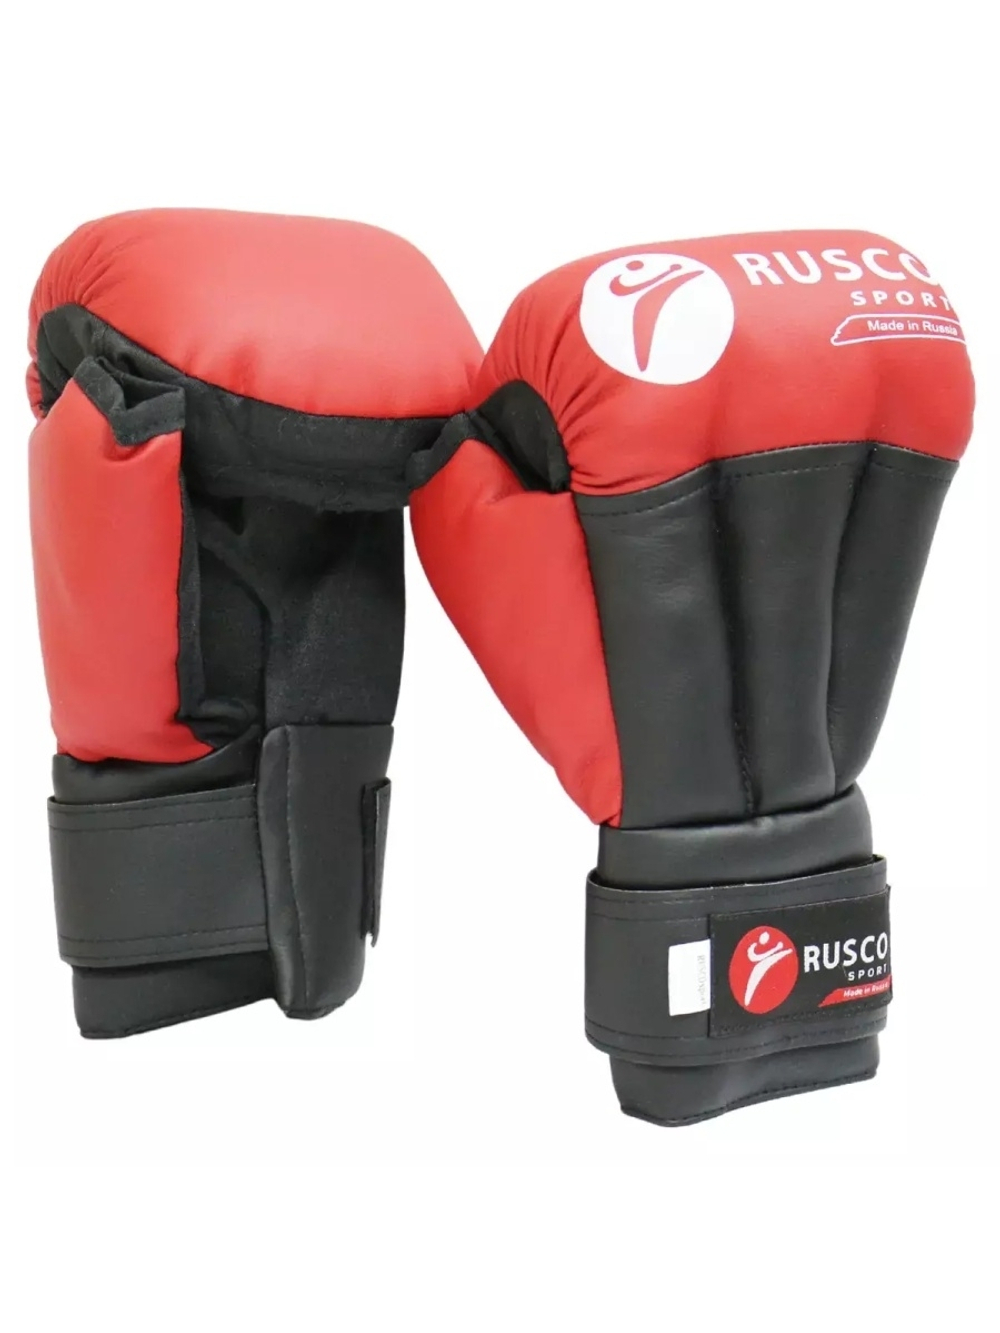 Перчатки для Рукопашного боя Rusco Sport